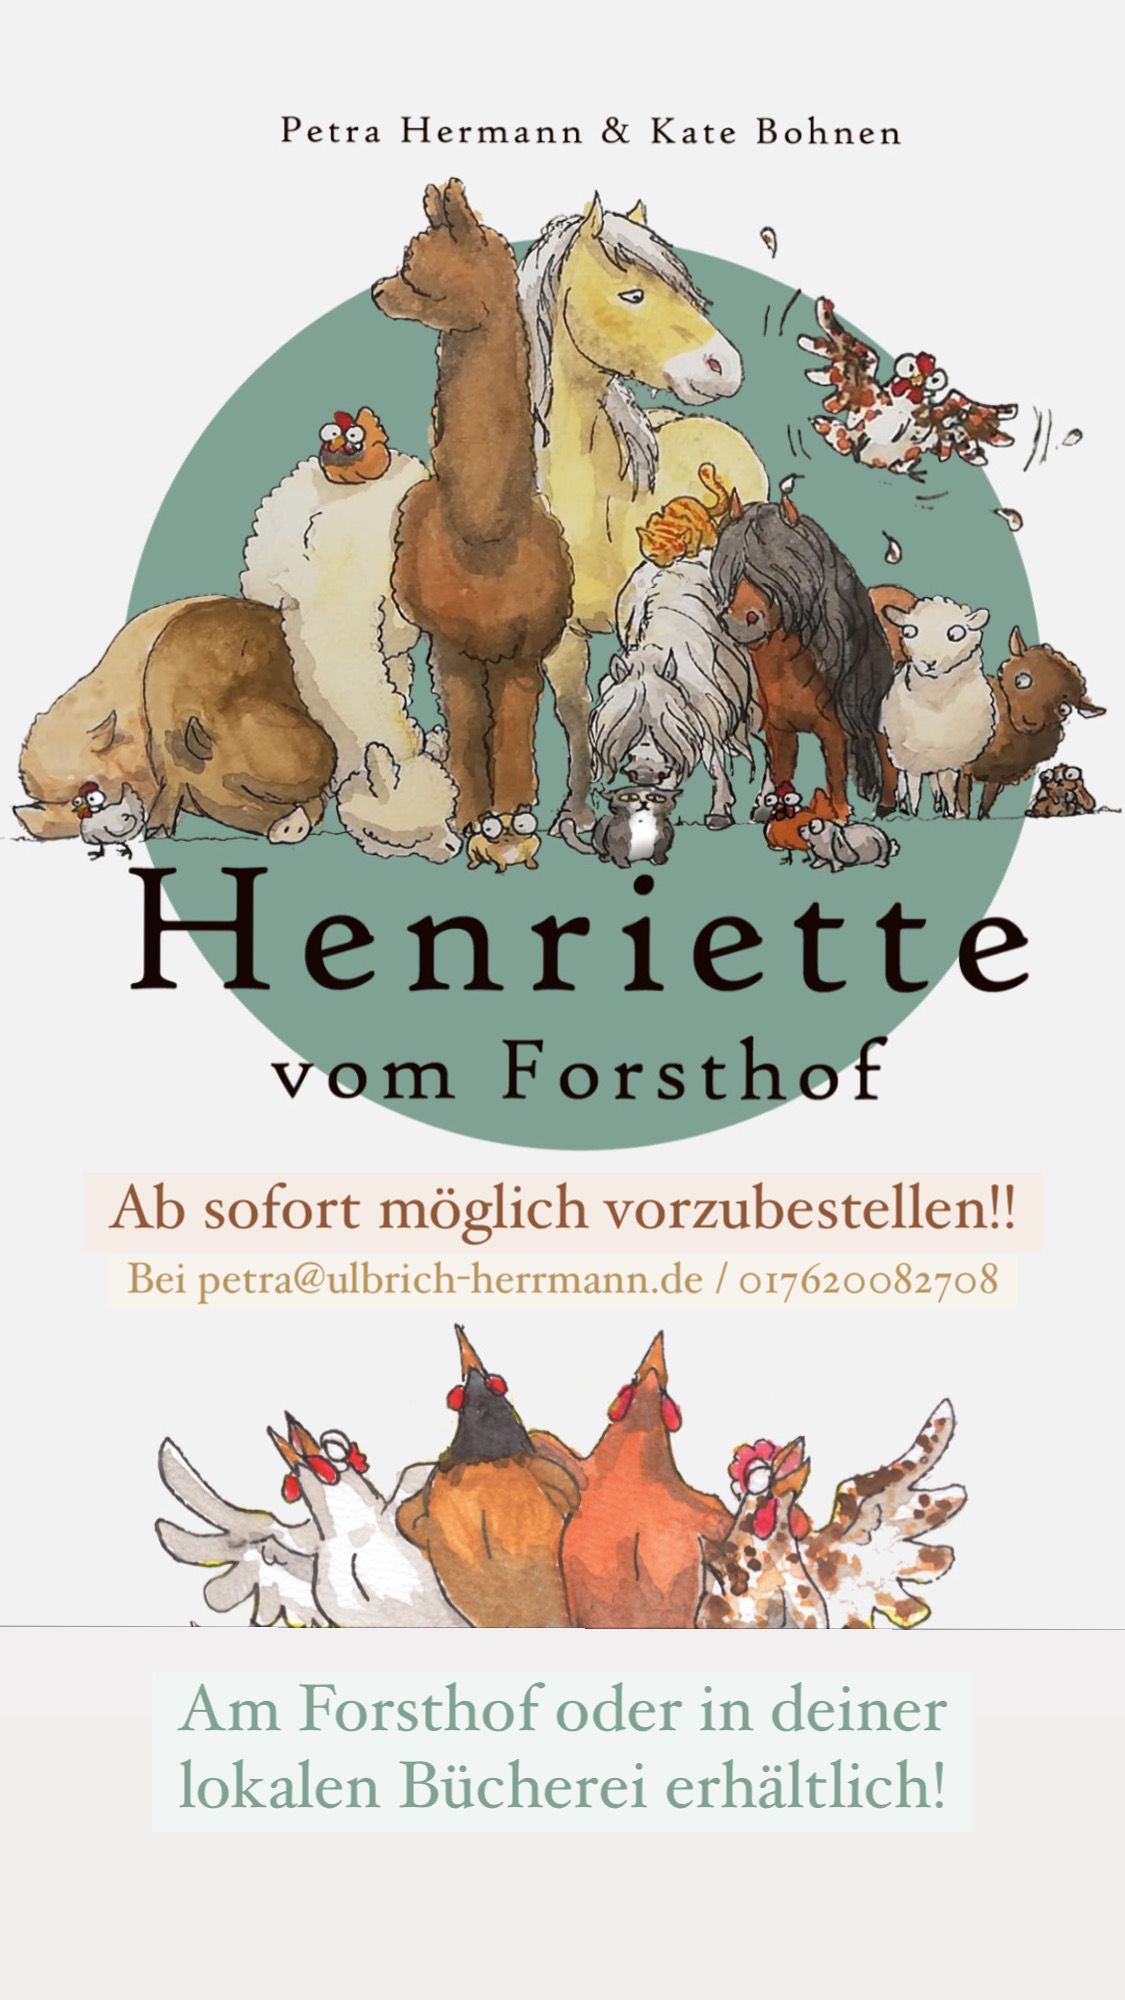 Henriette is coming soon